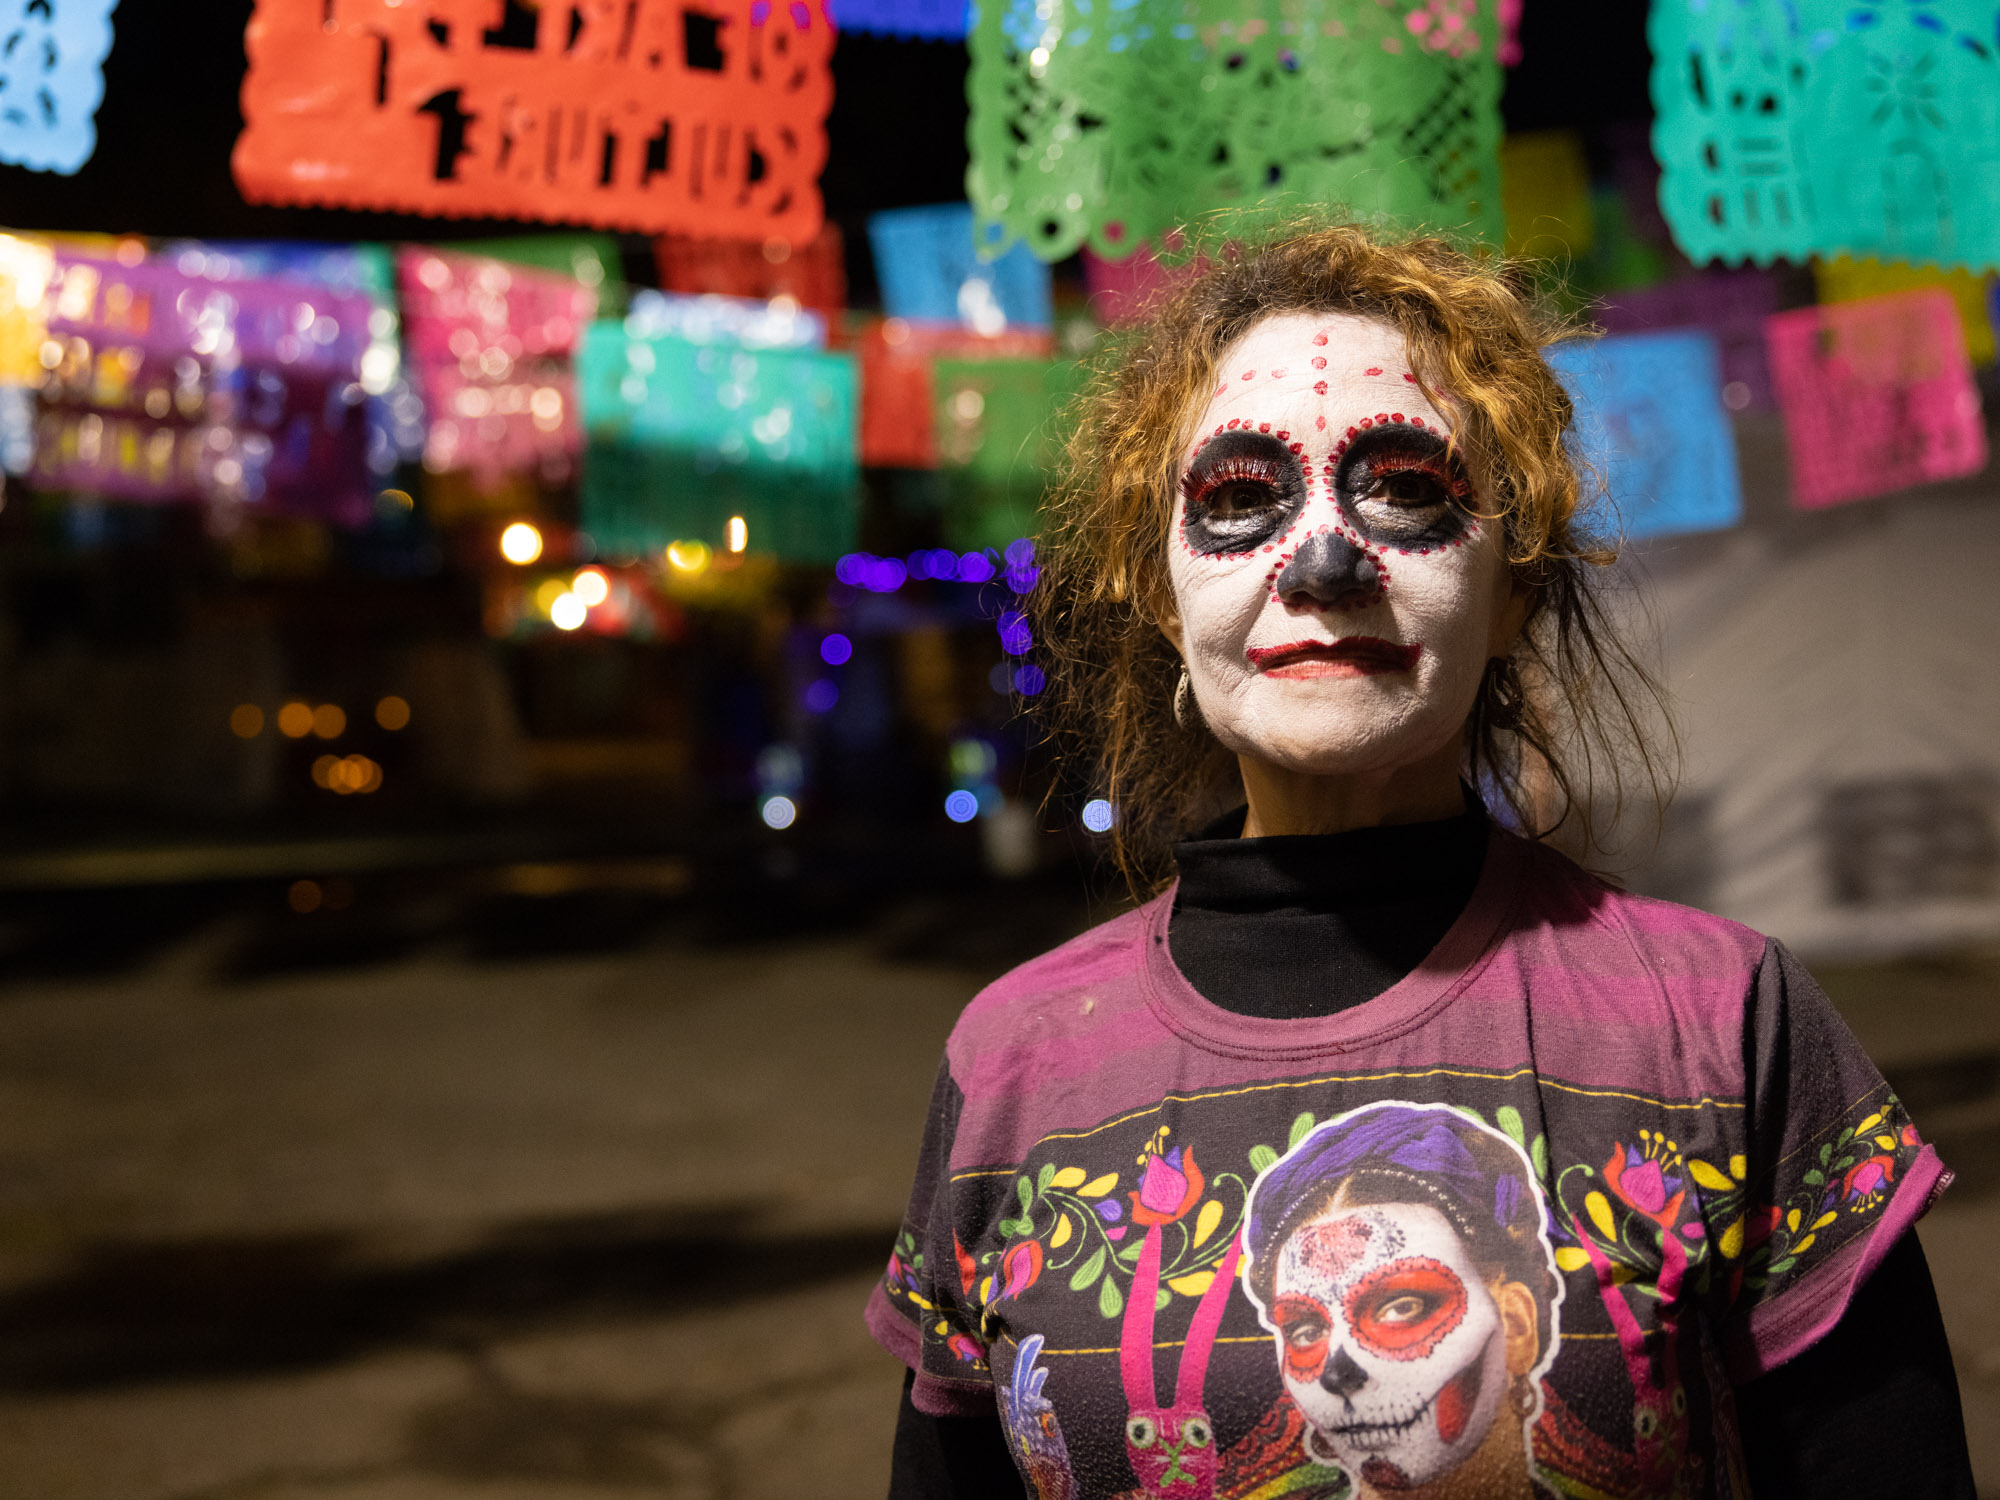 Video Sacramento Día de los Muertos celebration creates space to share